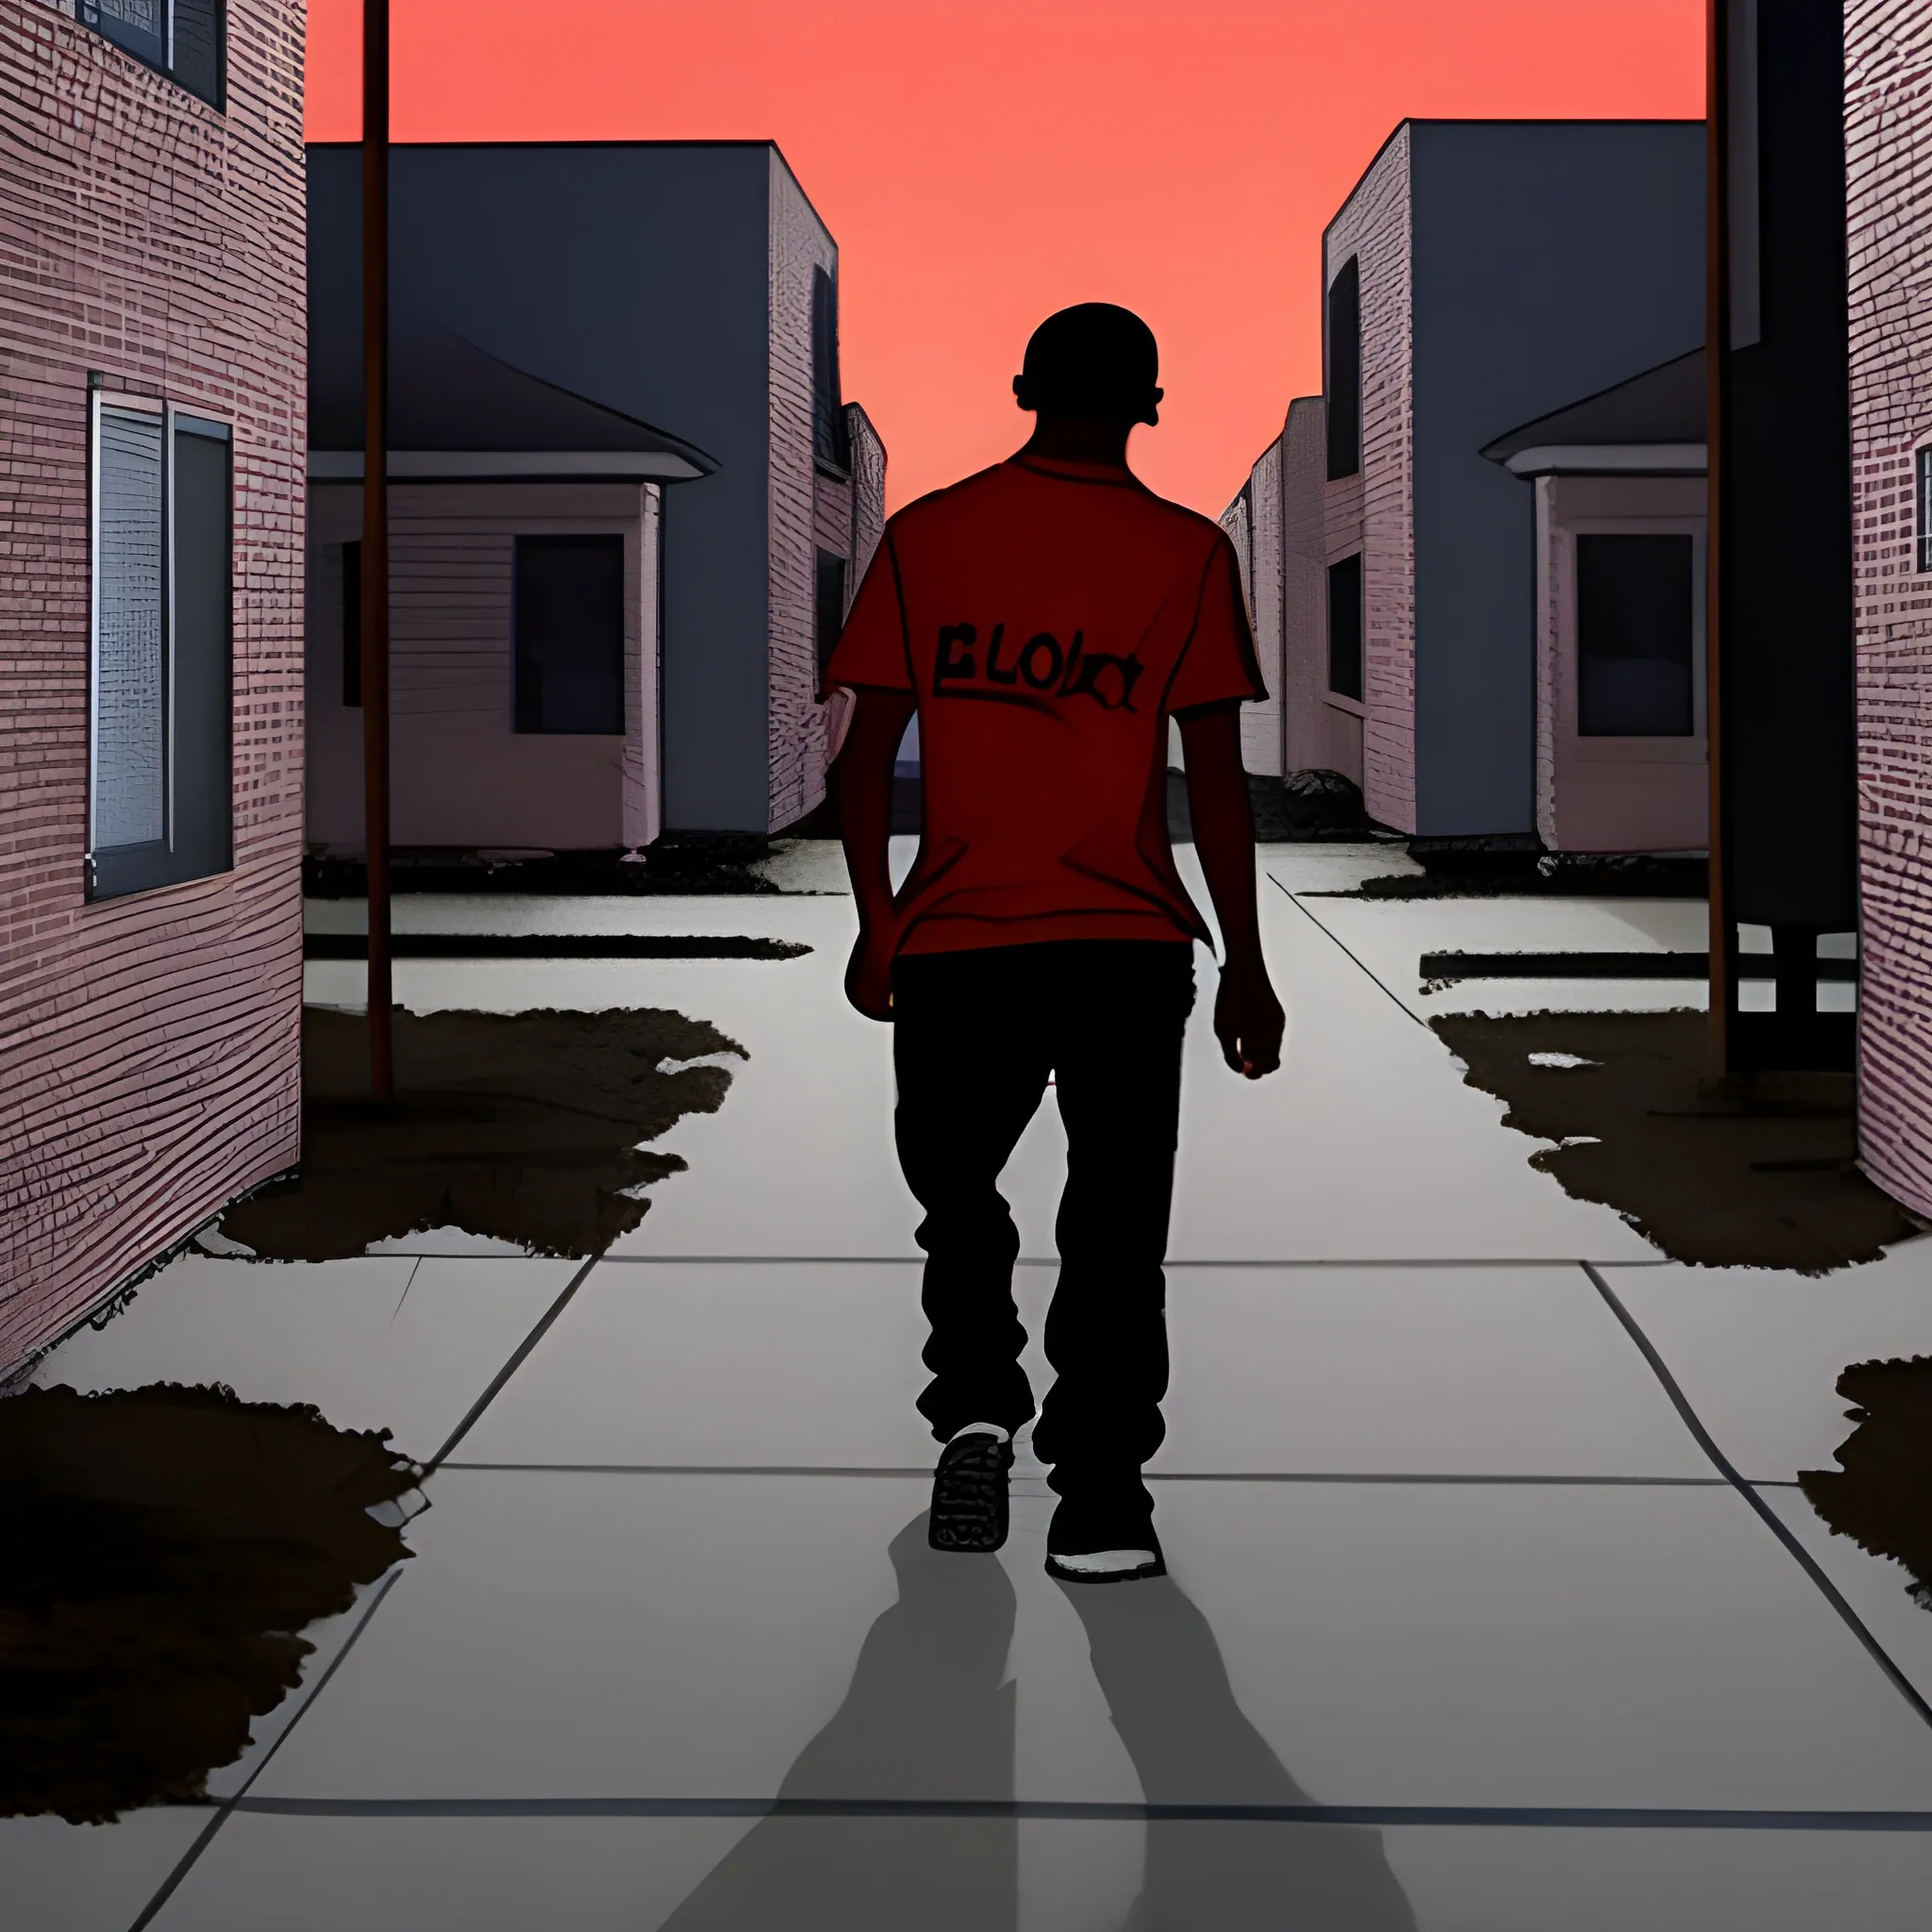 A 21-year-old blood gang member walking backwards through a Flint, MI housing project, at night. Cartoon

